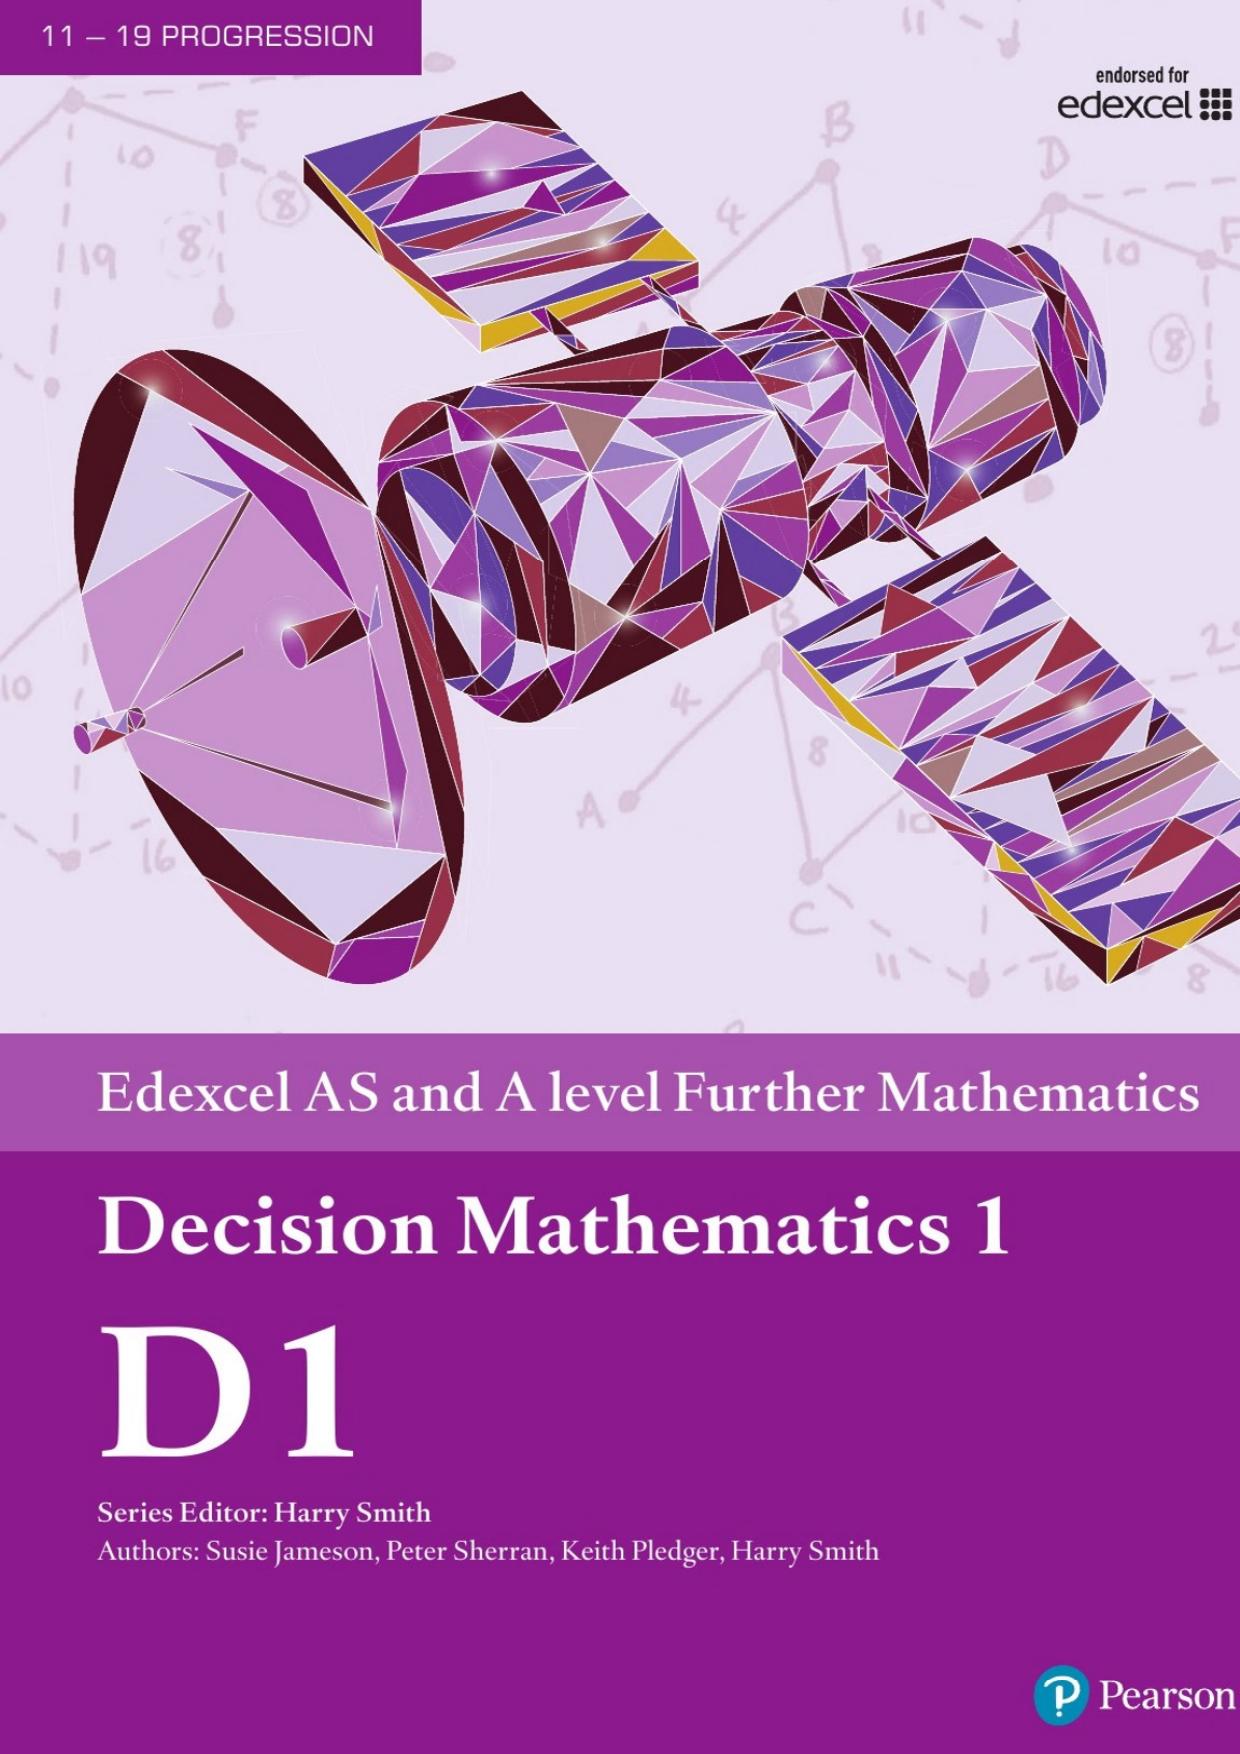 Edexcel AS and A level Decision Mathematics 1